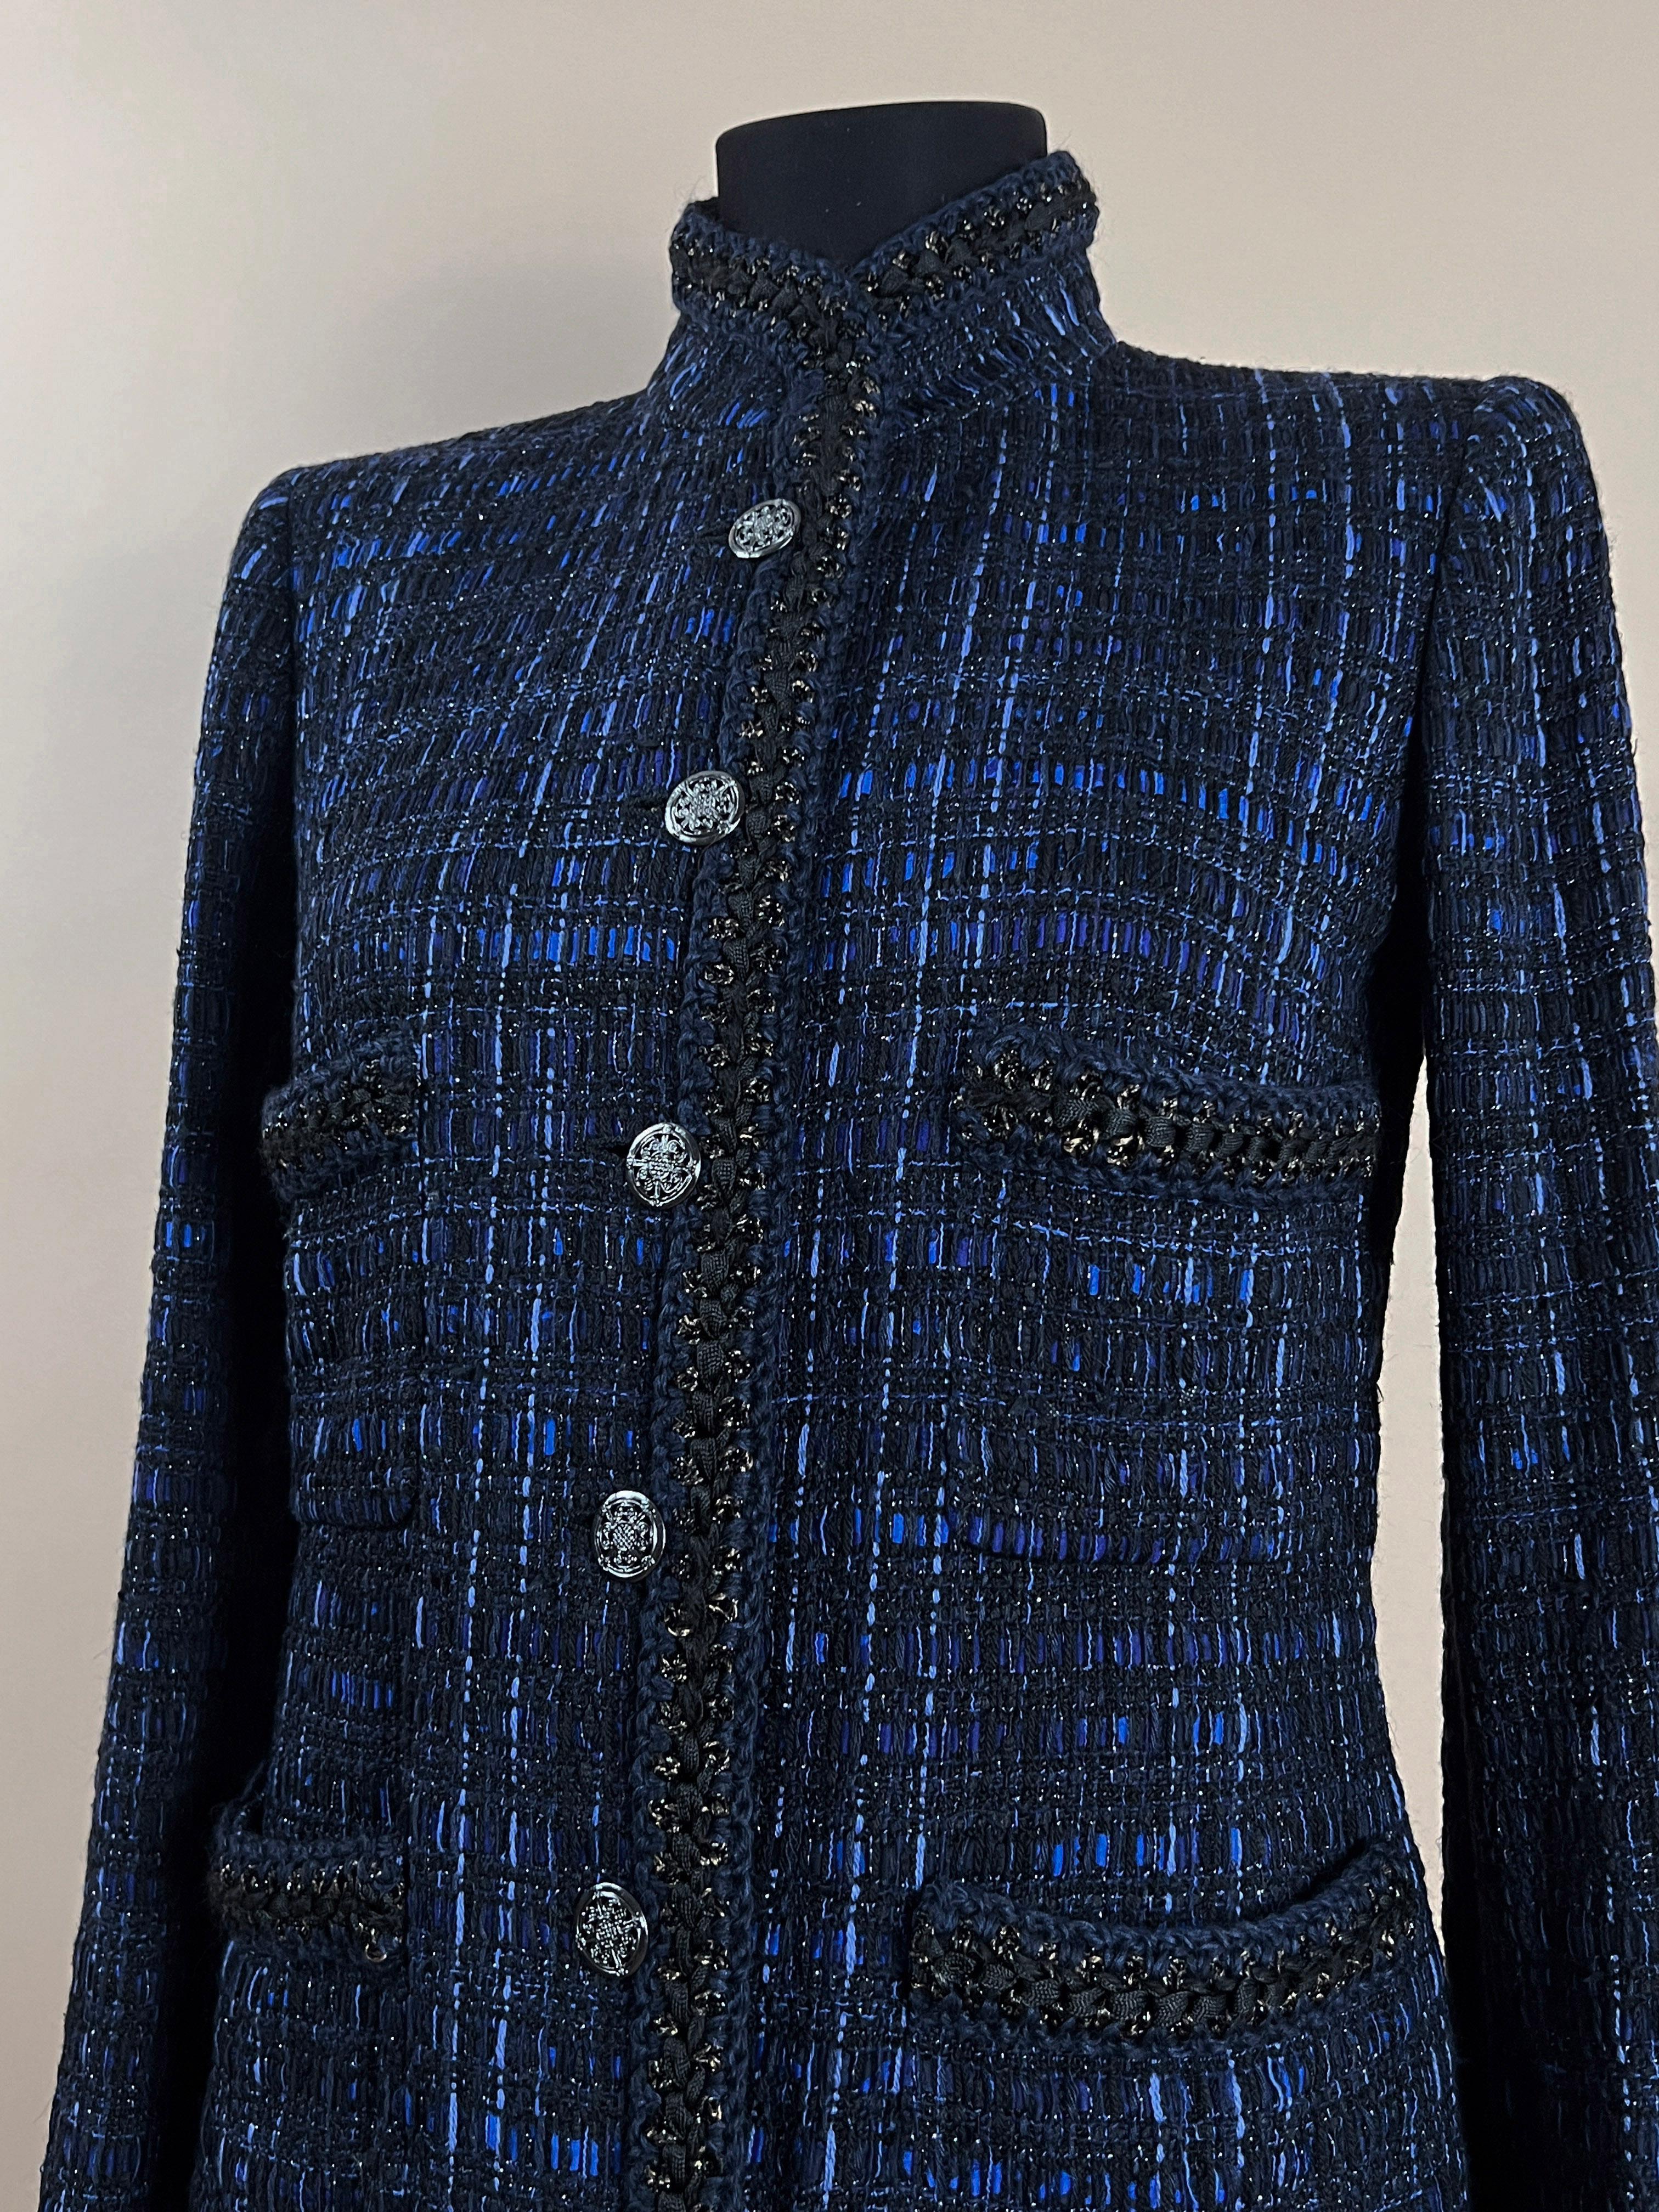 Chanel Shanghai Collection Ribbon Tweed Jacket, 2010 1